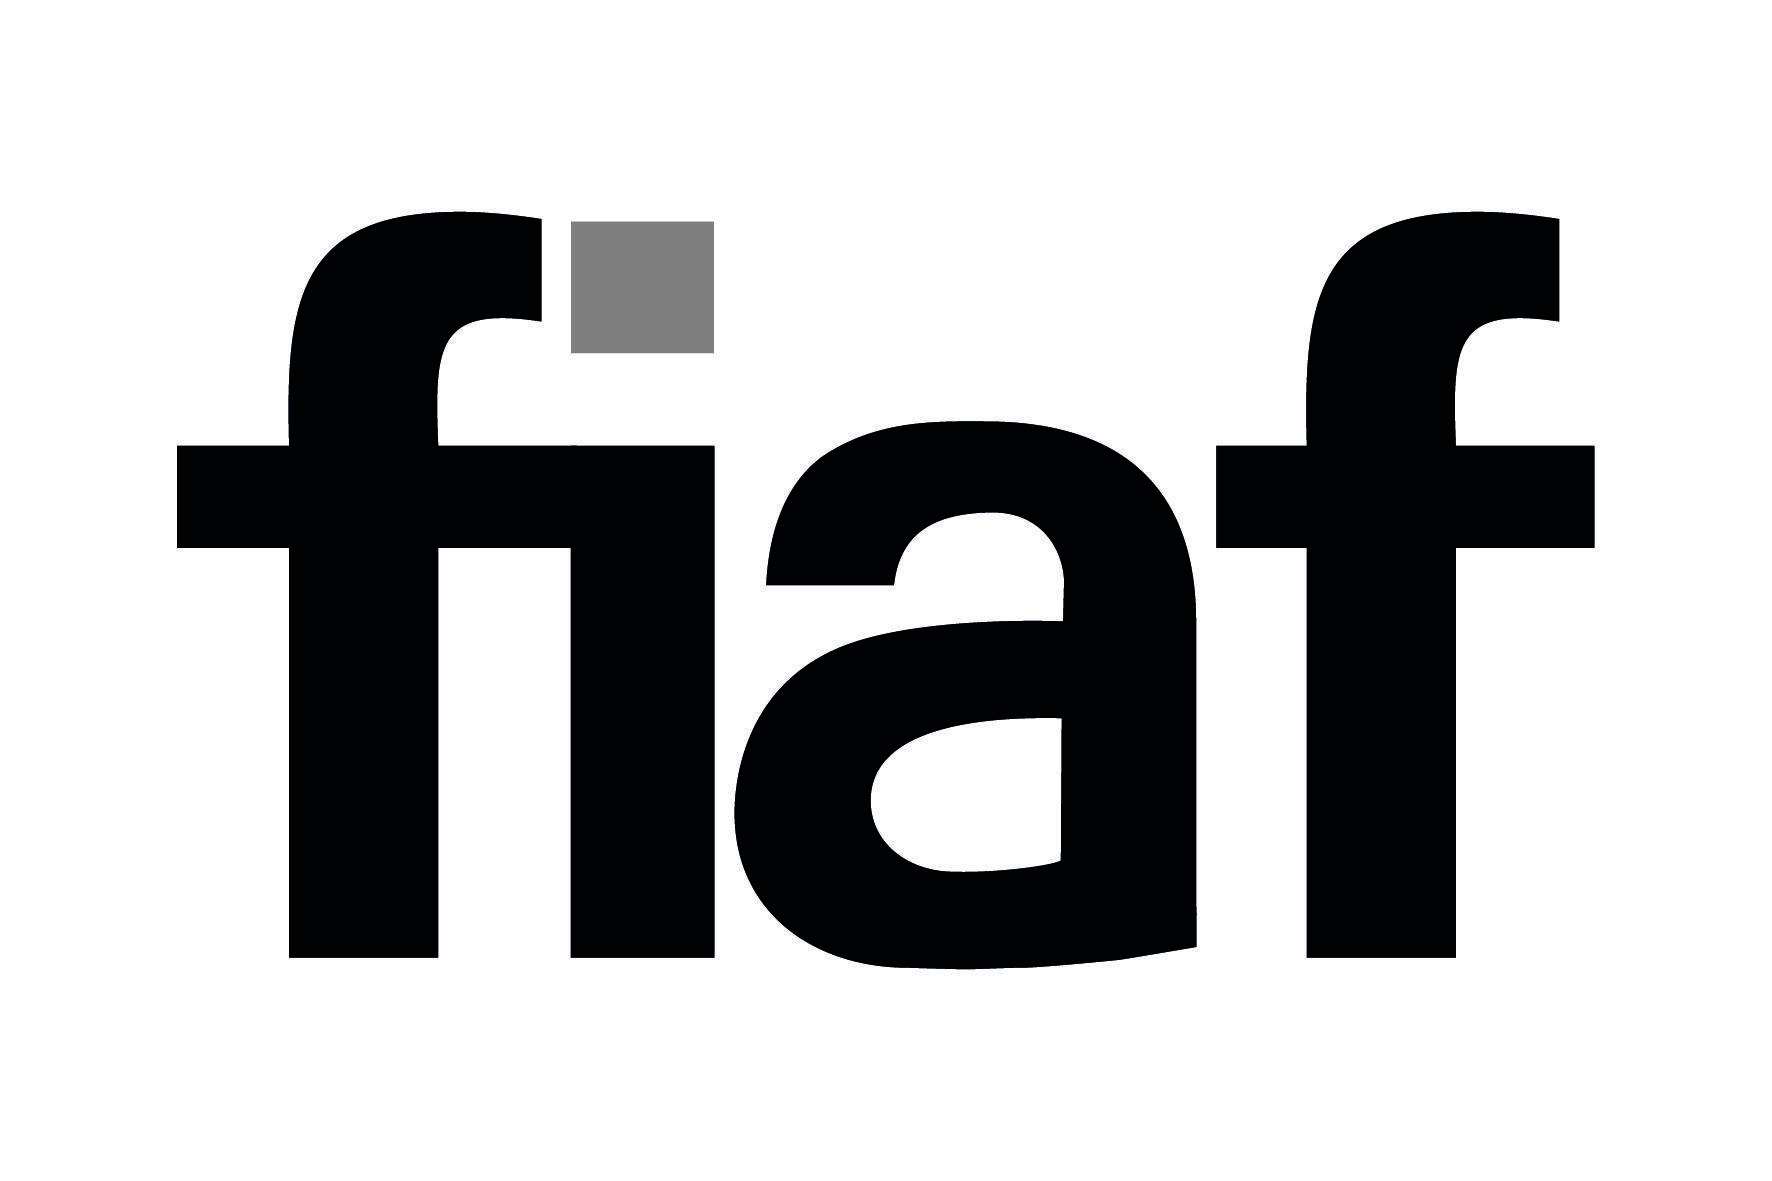 Black White Grayscale Logo - International Federation of Film Archives